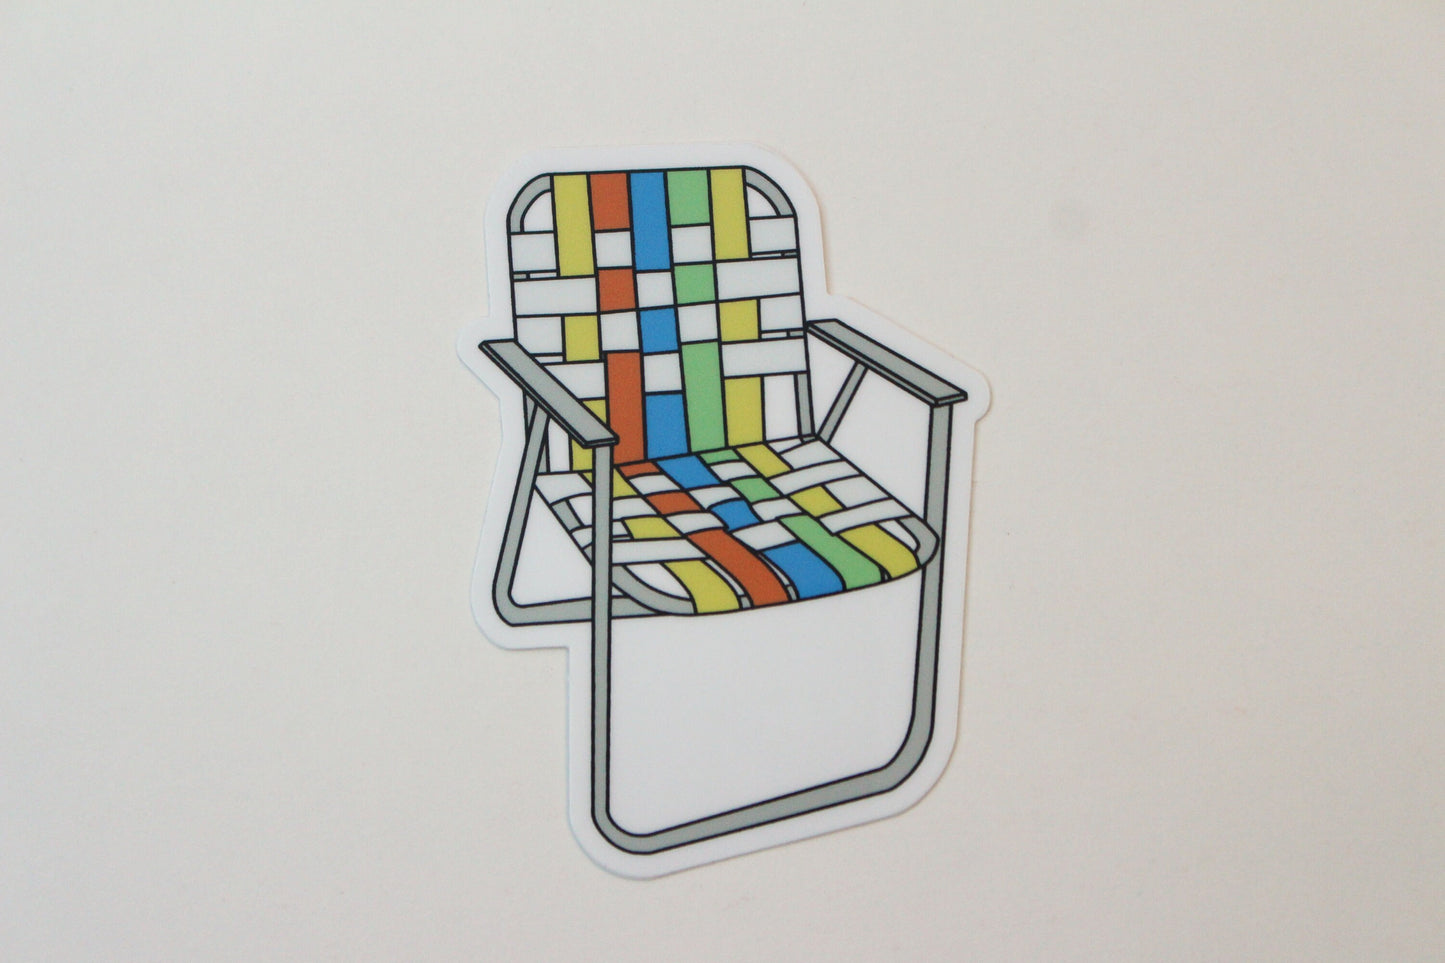 Vintage Aluminum Lawn Chair Sticker - Classic Primary Rainbow Blue